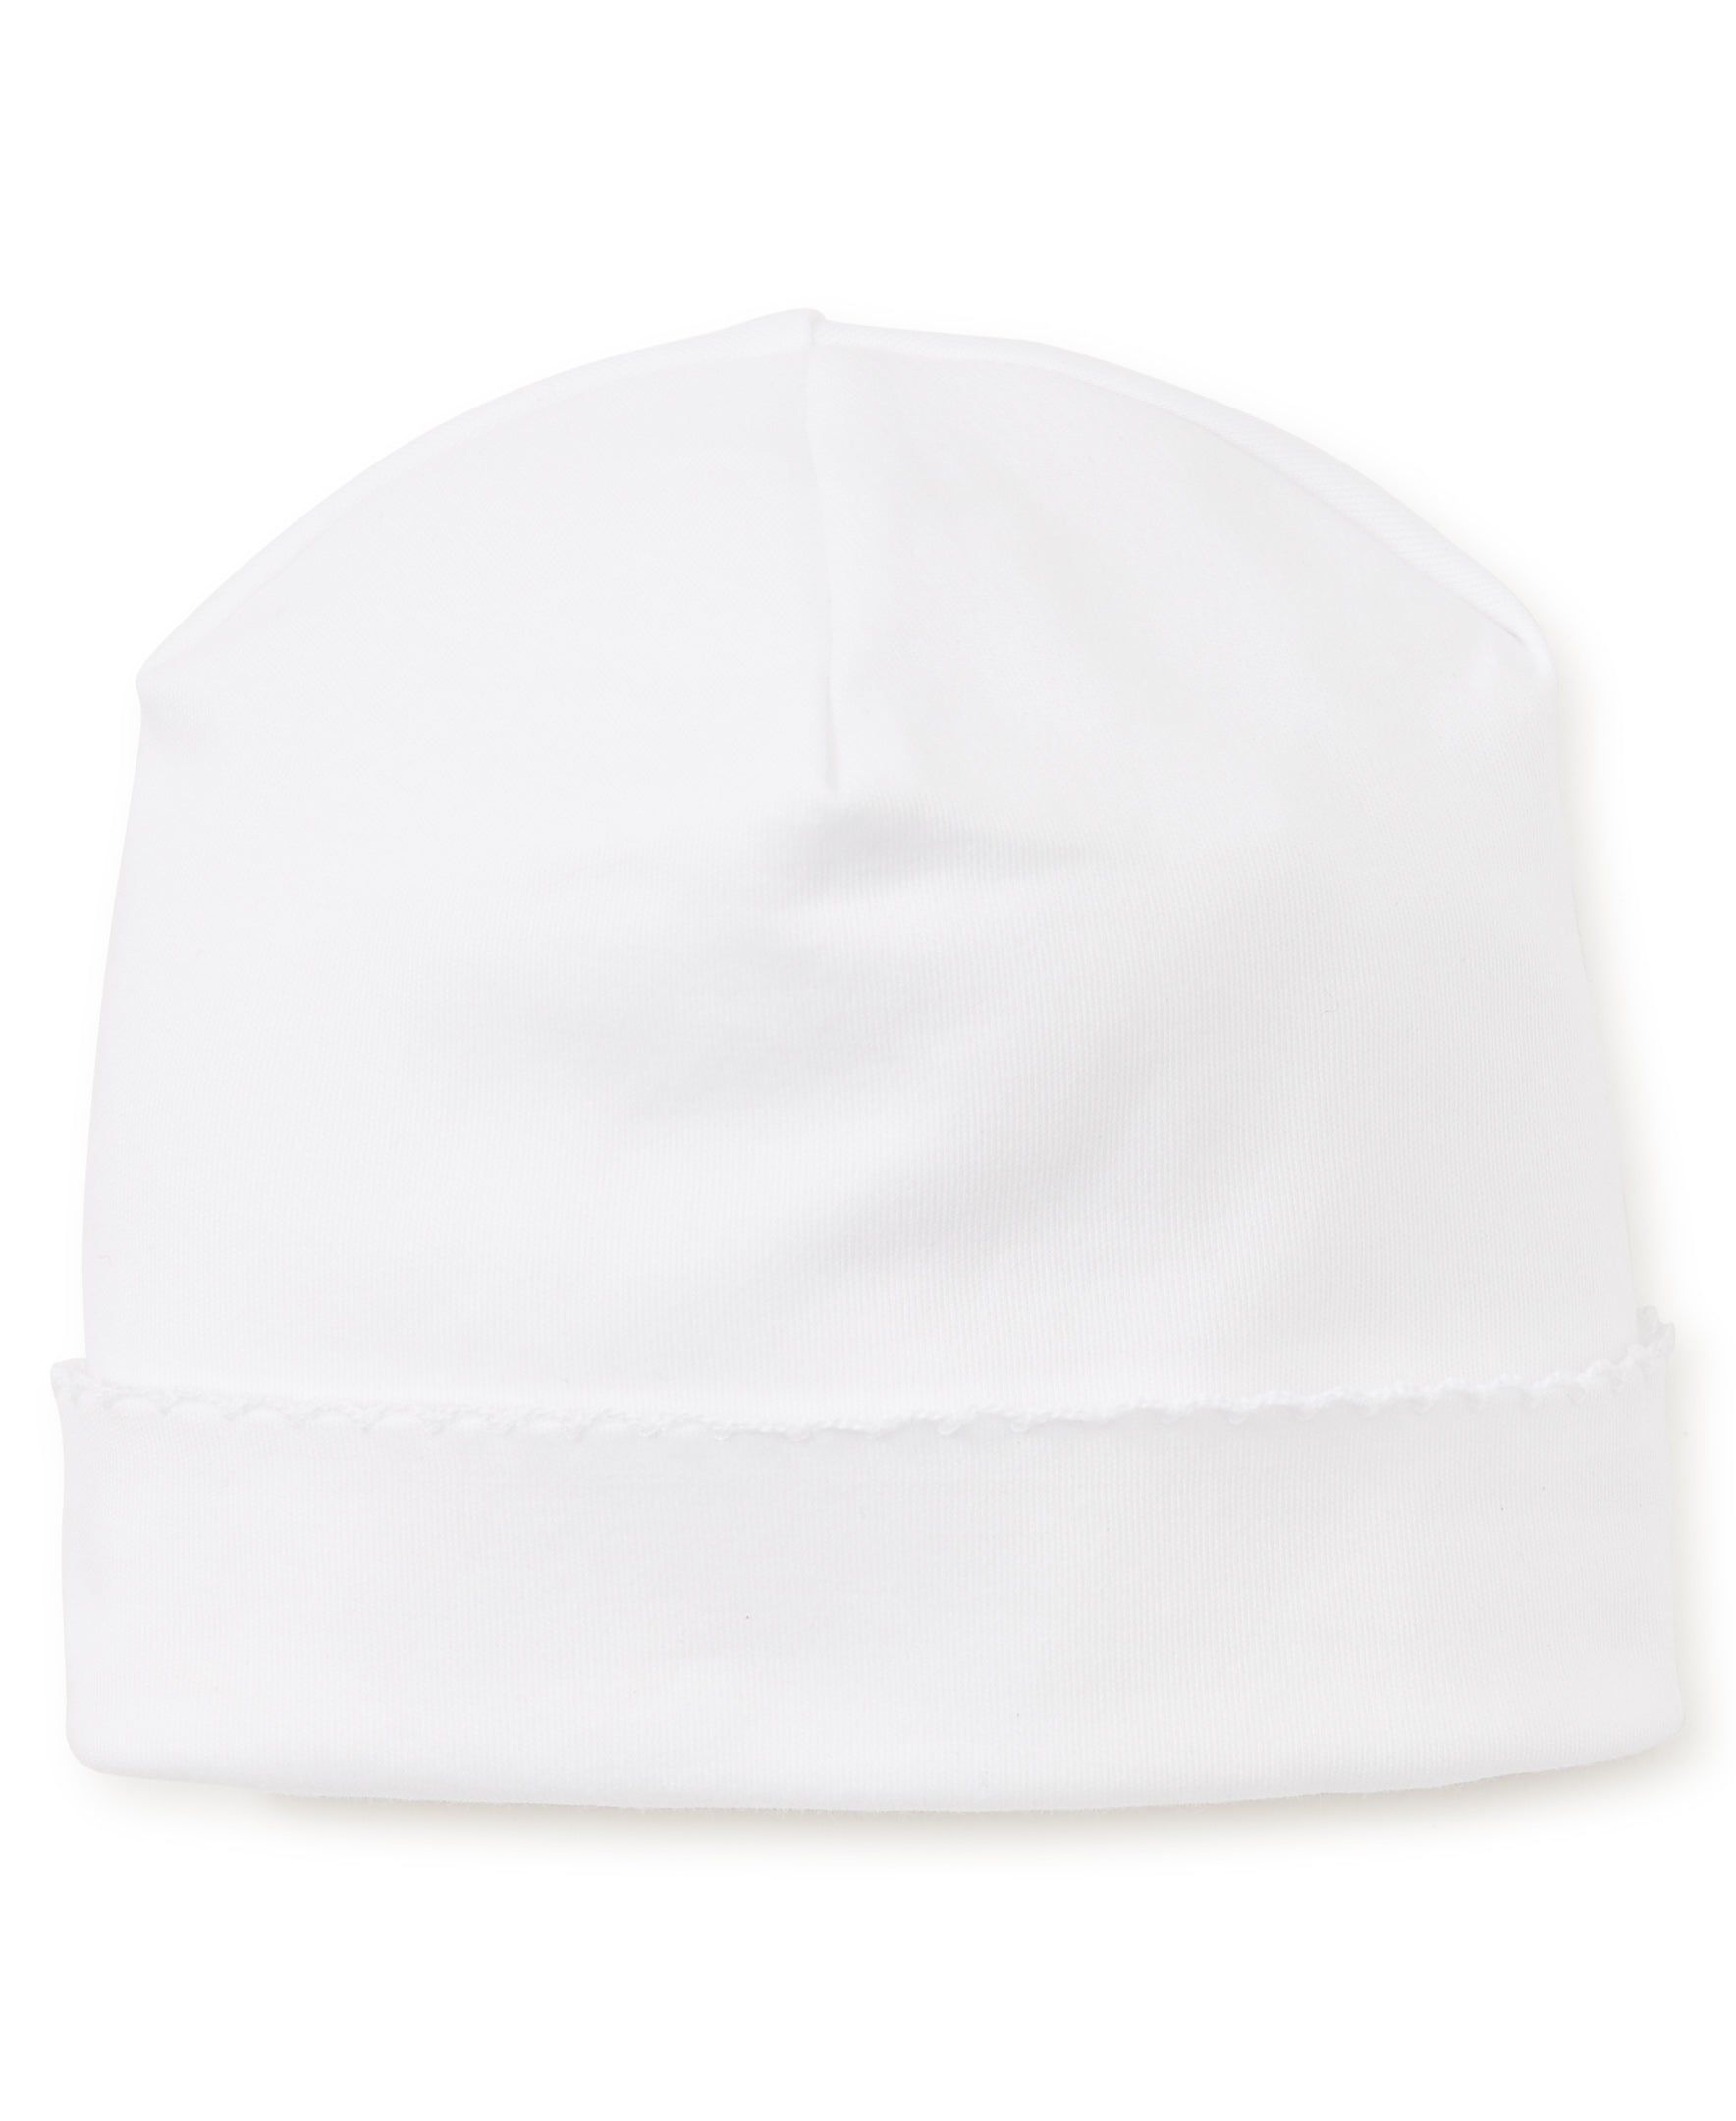 Personalized White Kissy Basics Hat - Kissy Kissy